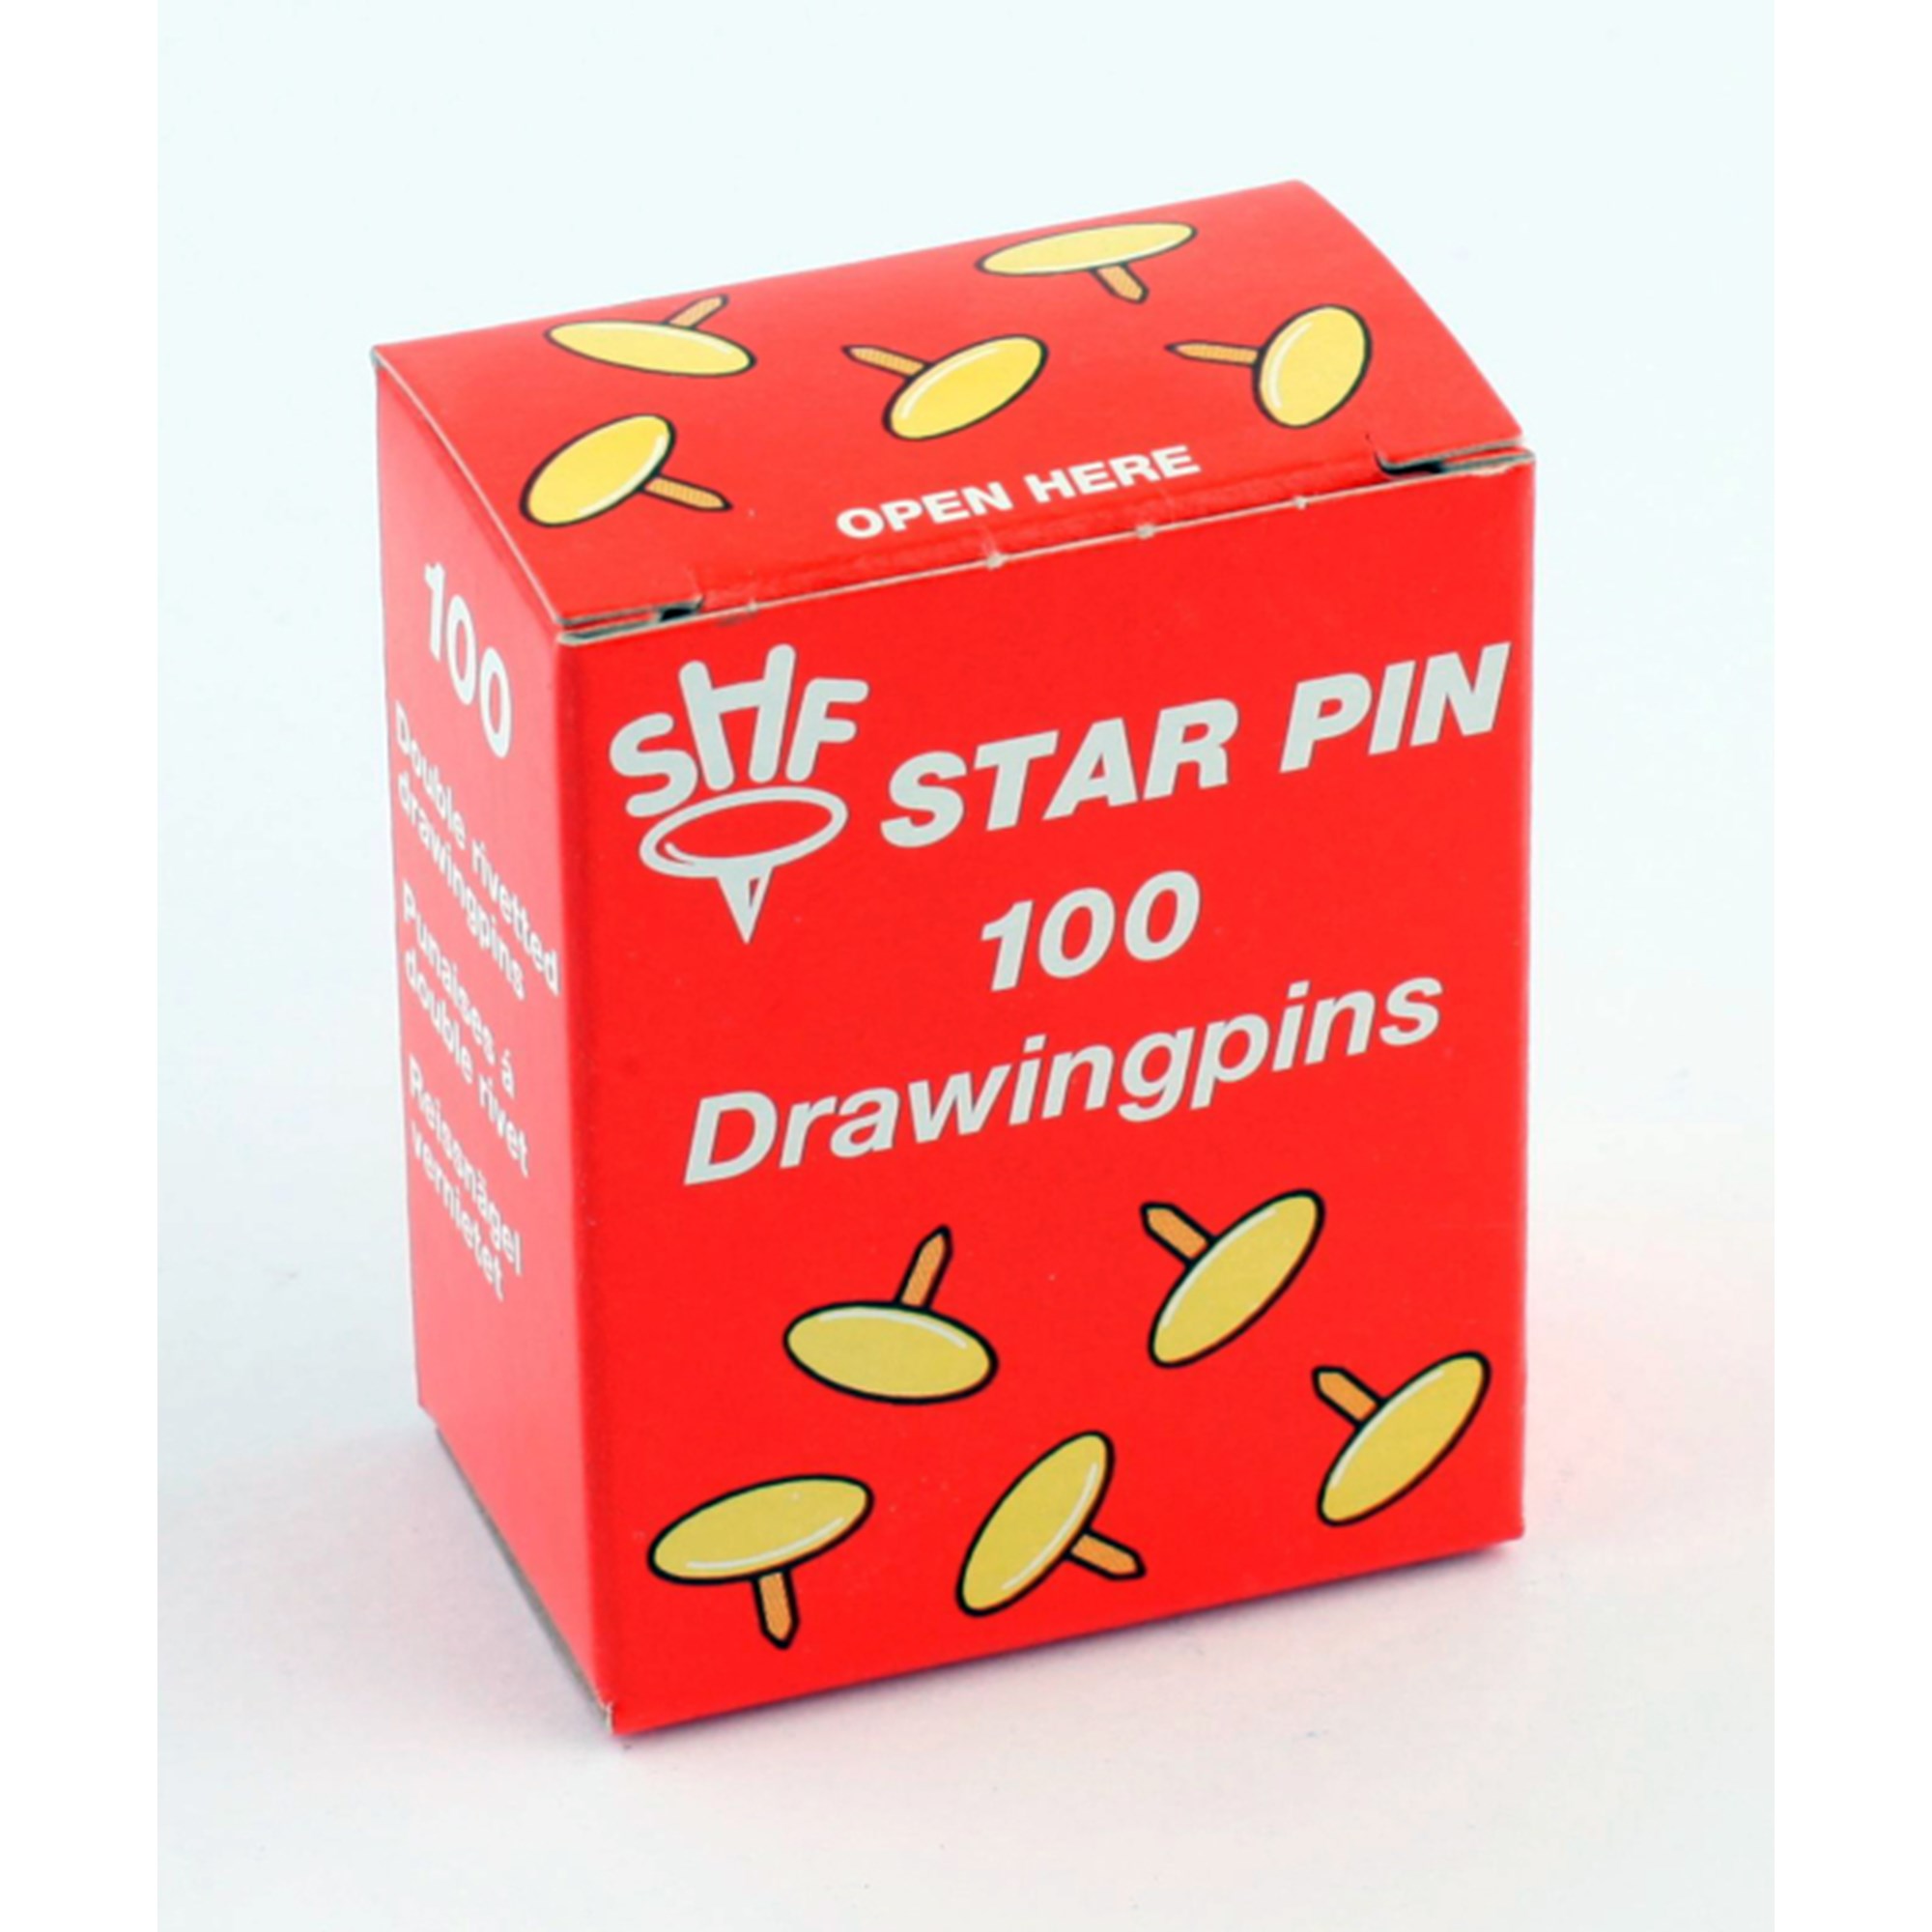 6: Tegnestifter Star Pin 100/stk messing